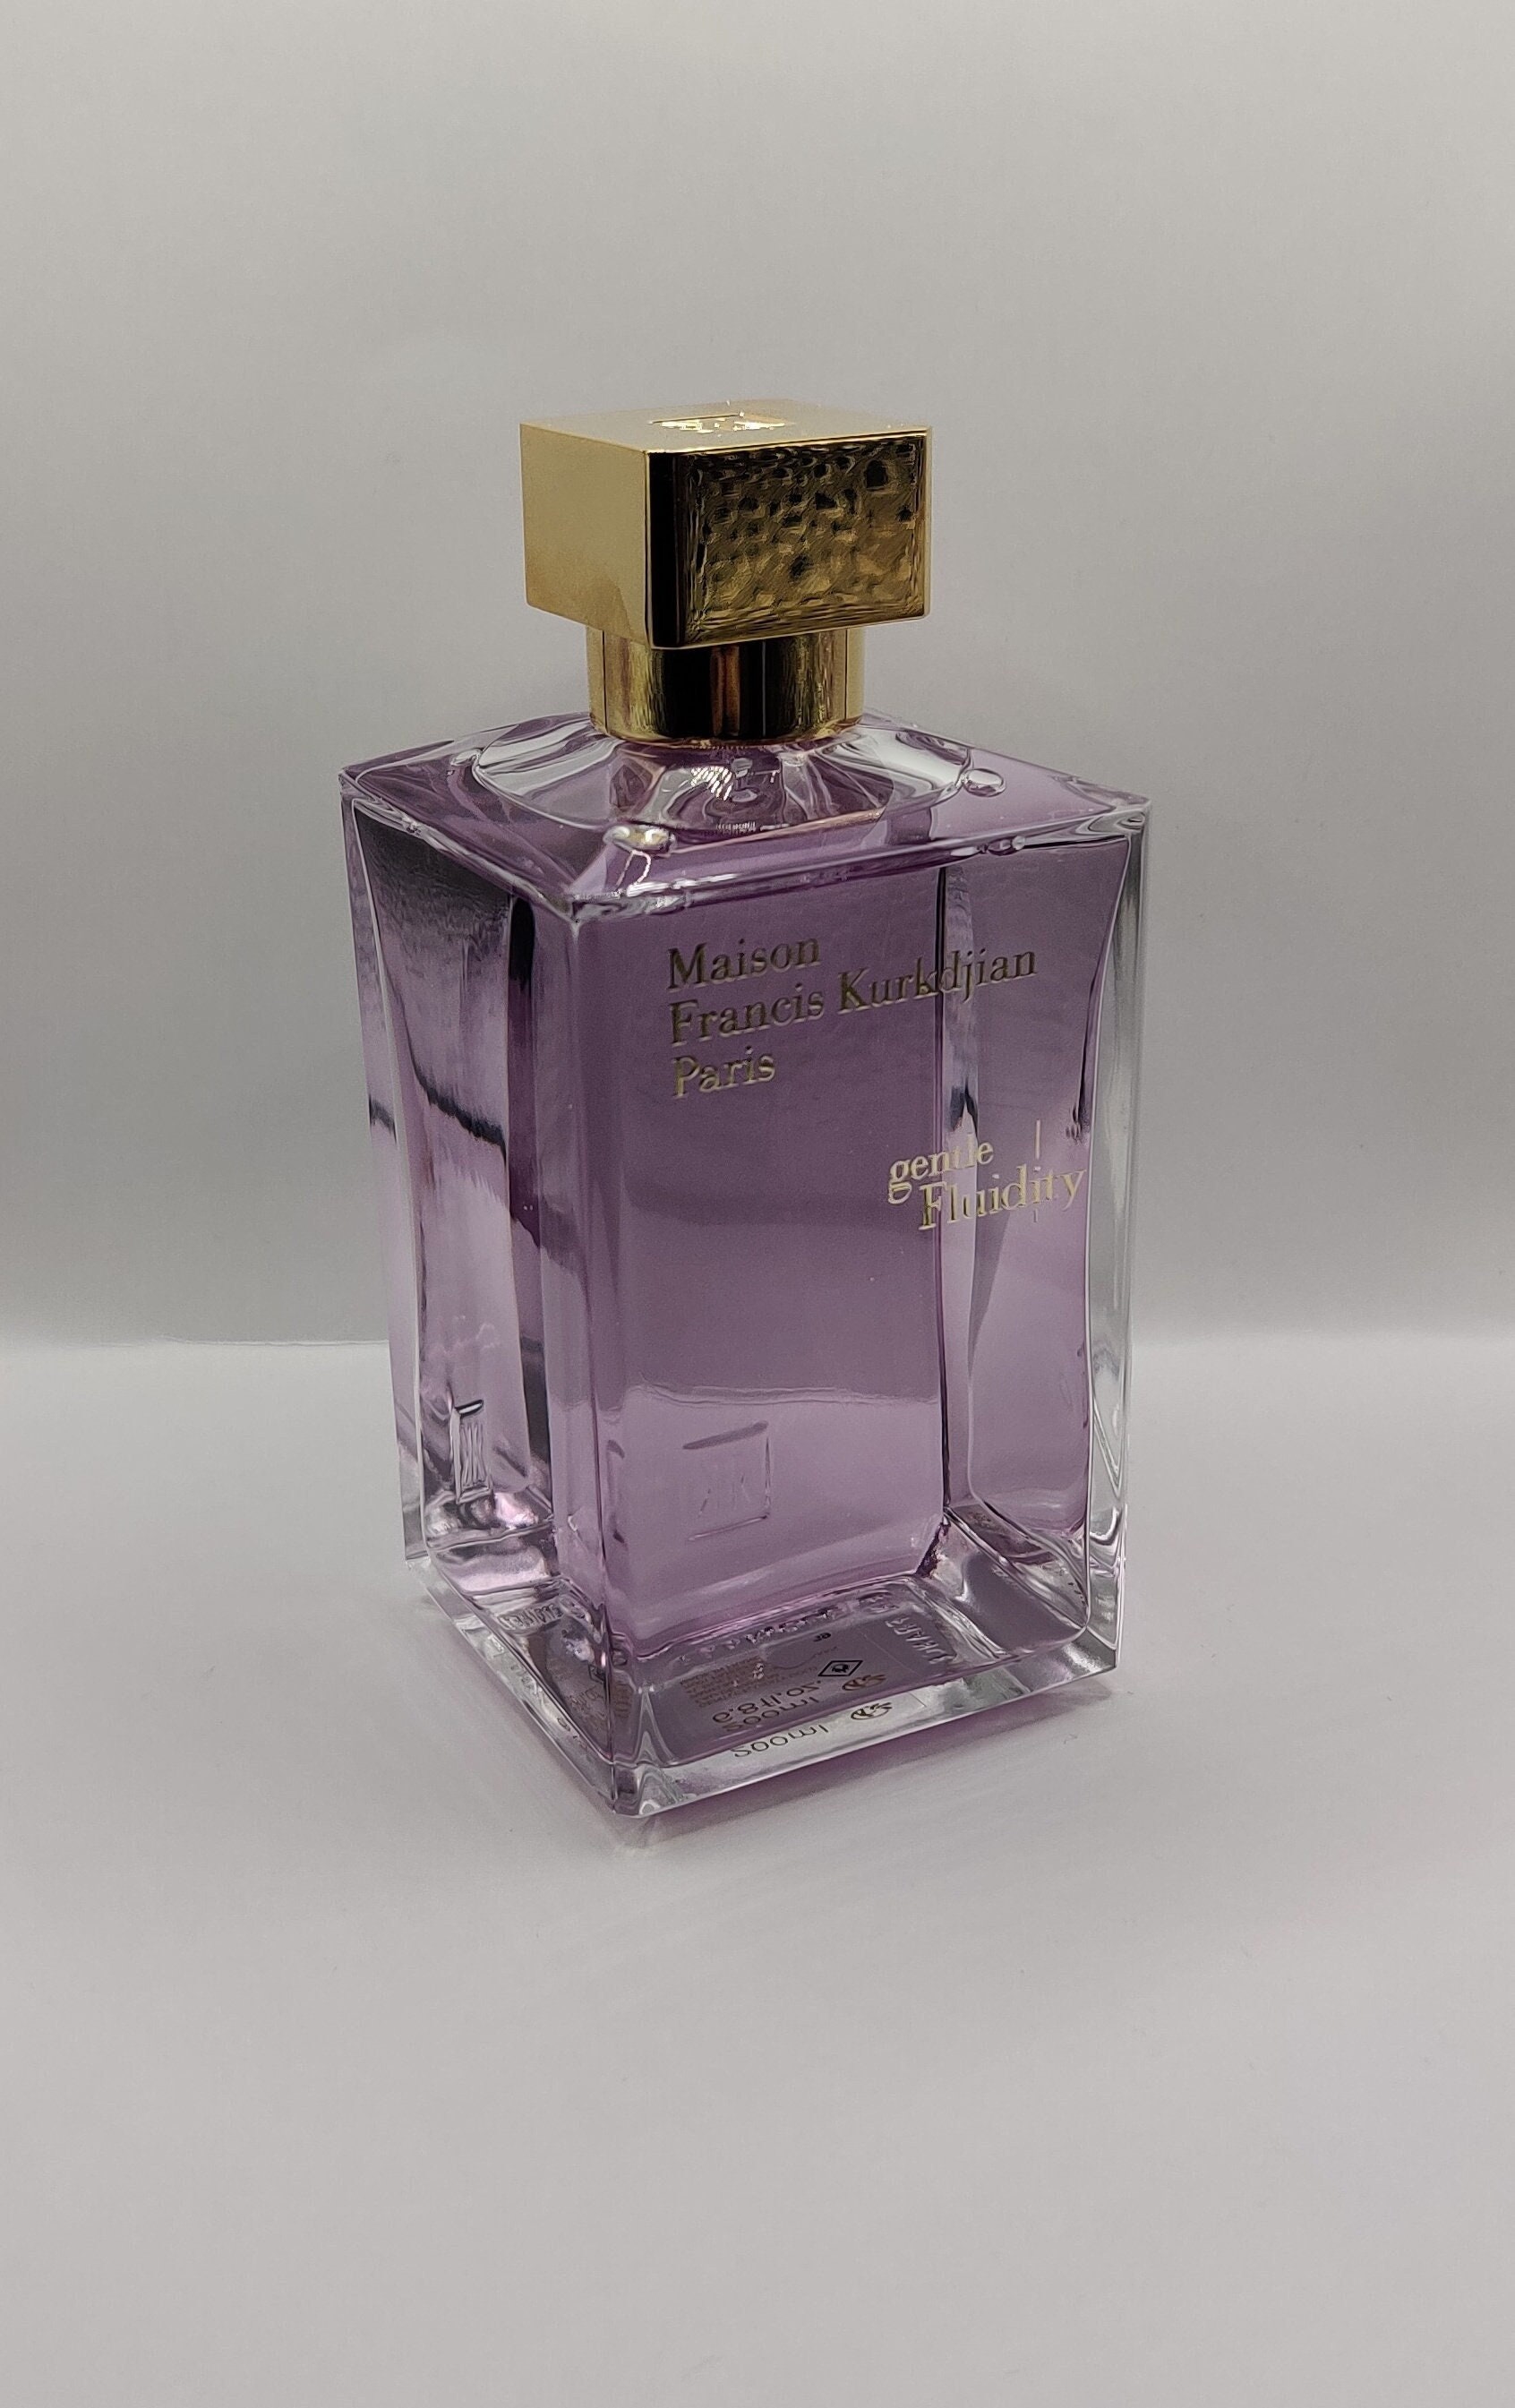 Gentle Fluidity Gold Perfume by Maison Francis Kurkdijan